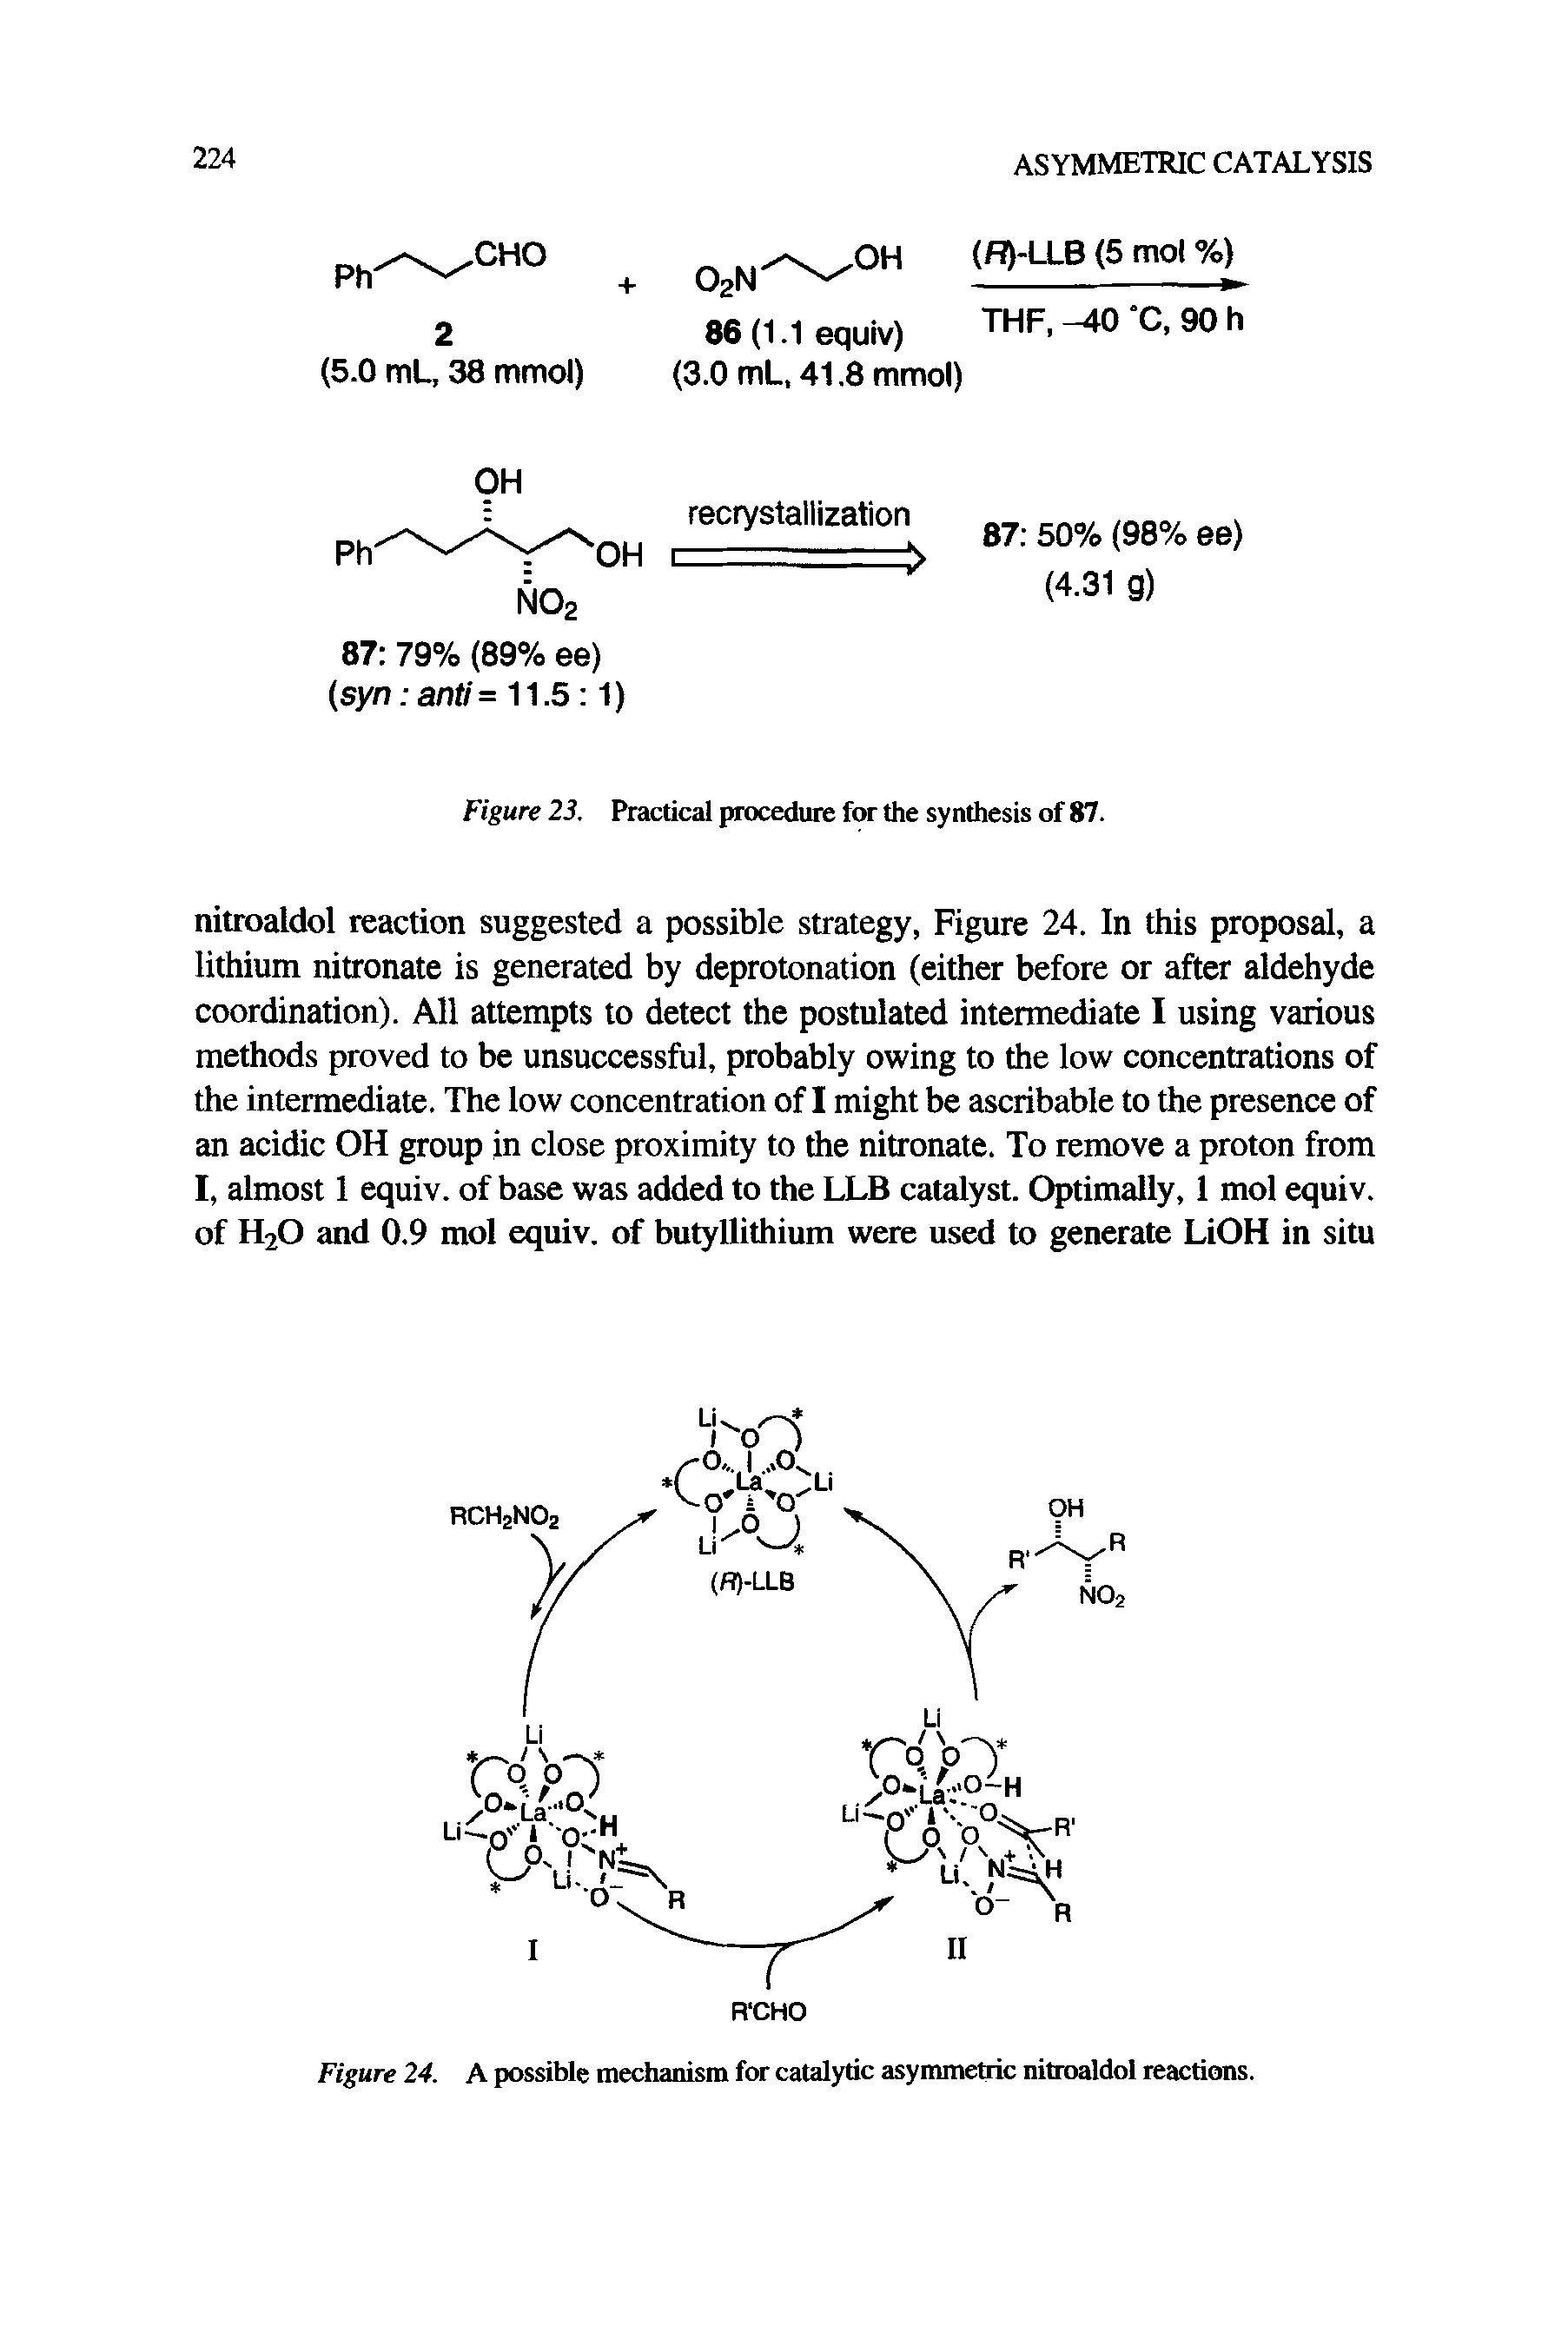 Figure 24. A possible mechanism for catalytic asymmetric nitroaldol reactions.